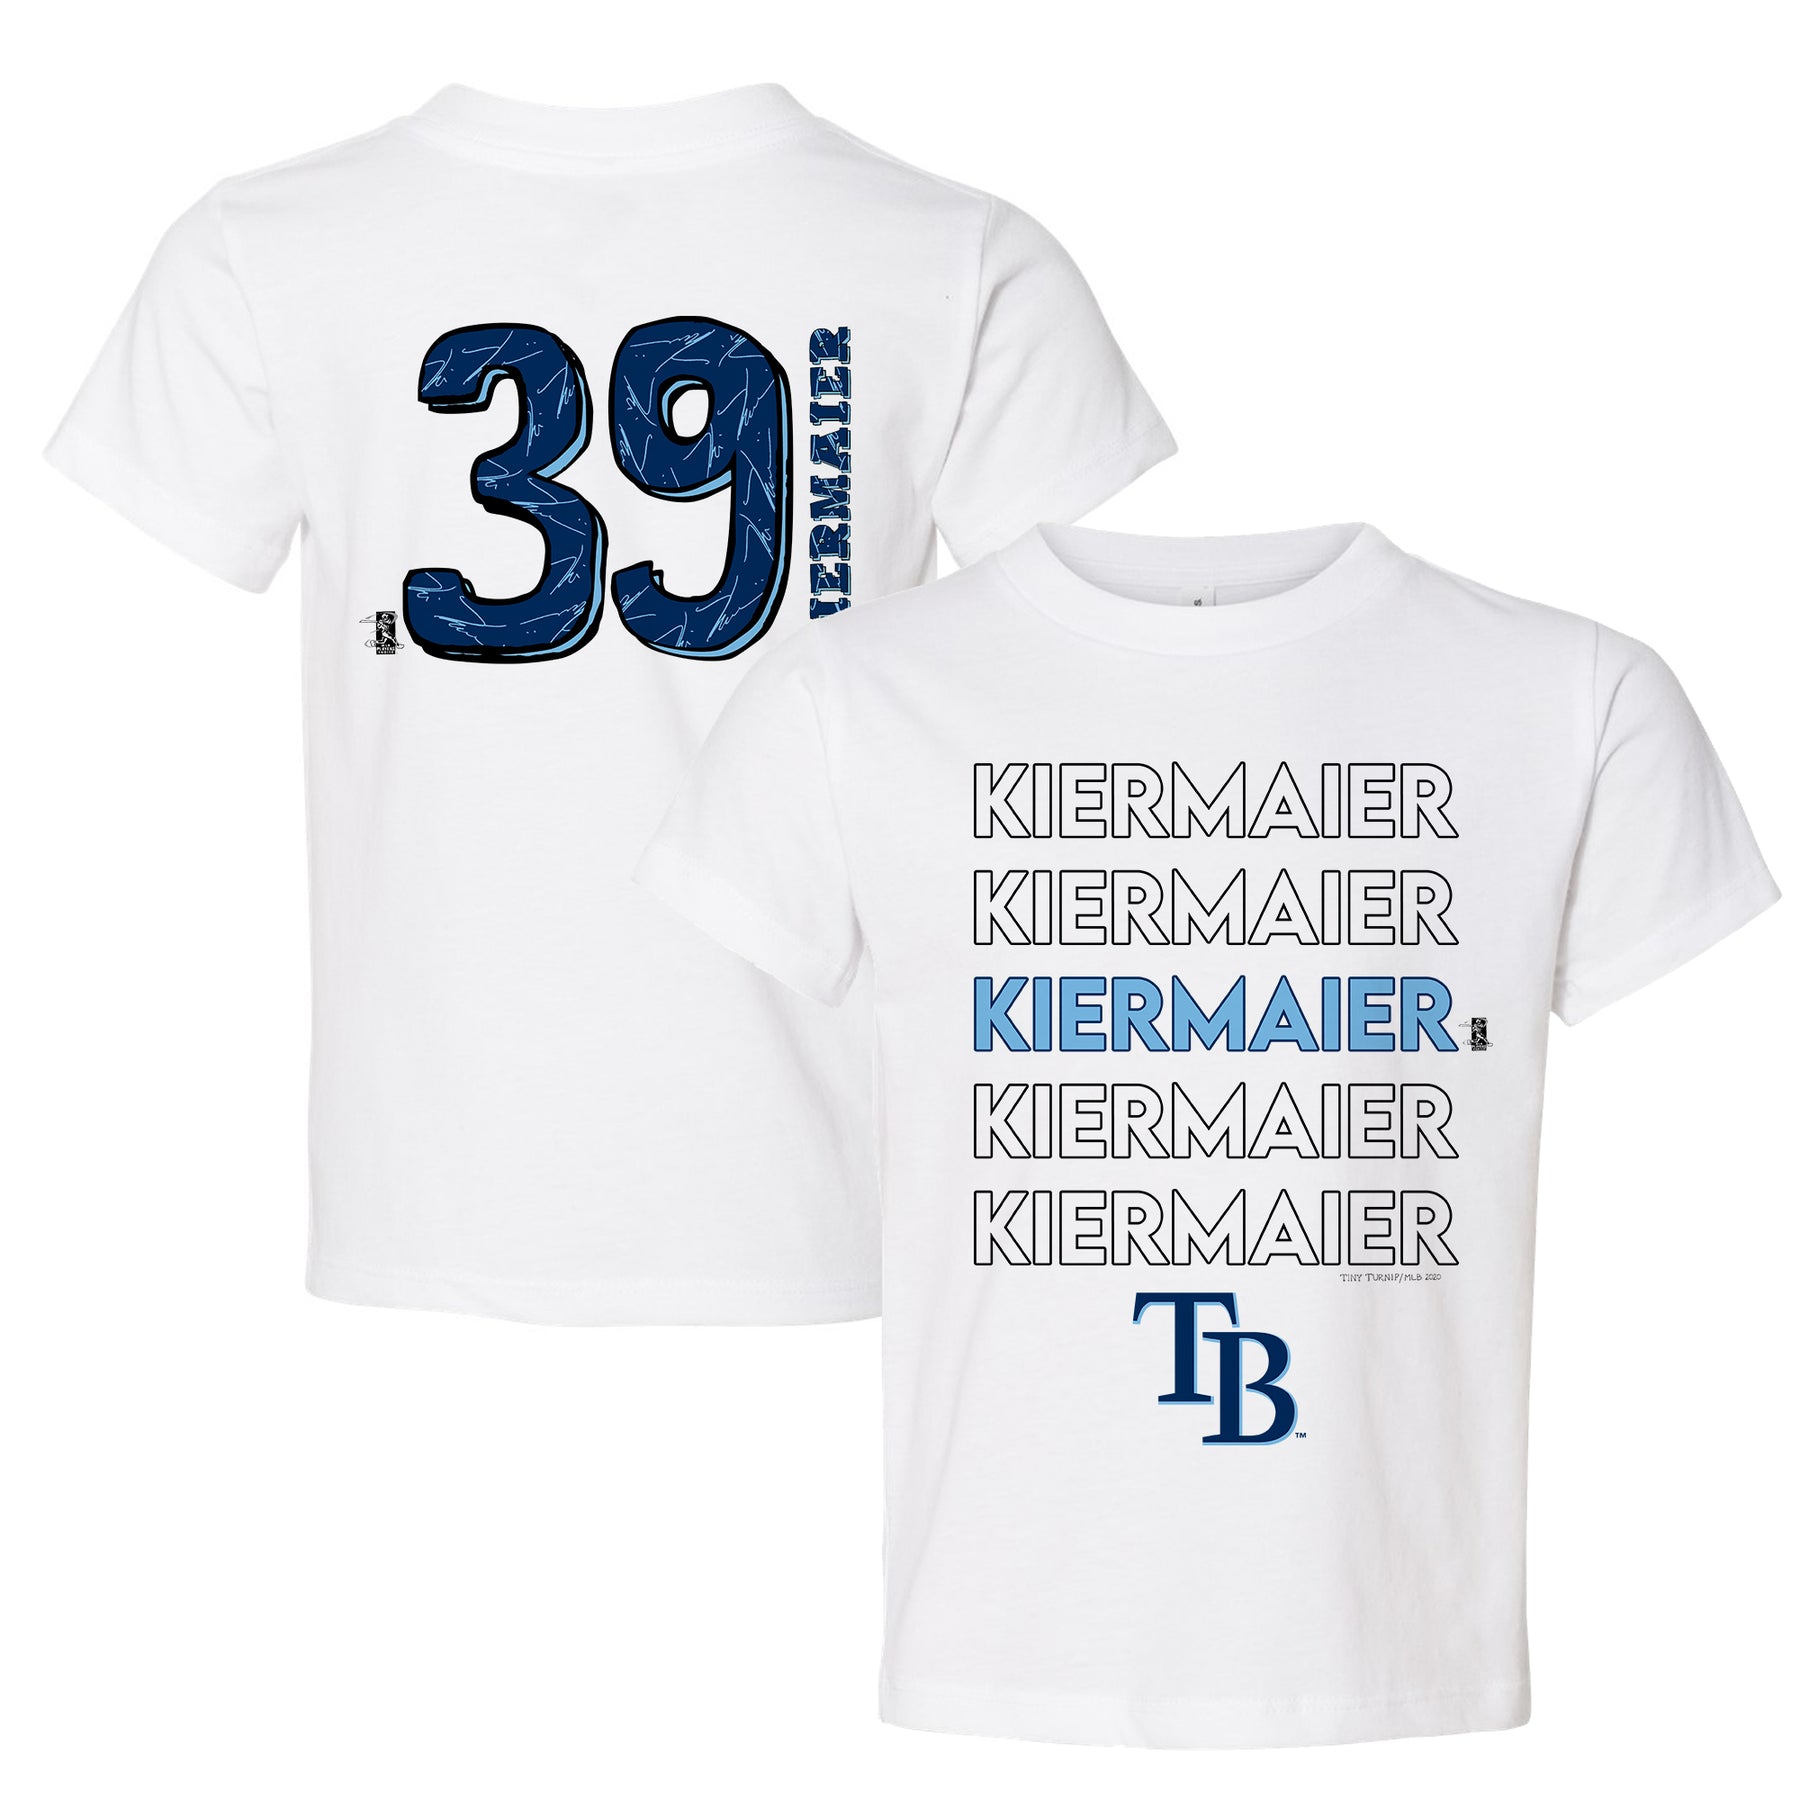 Texas Rangers Sugar Skull Baseball Shirt - High-Quality Printed Brand